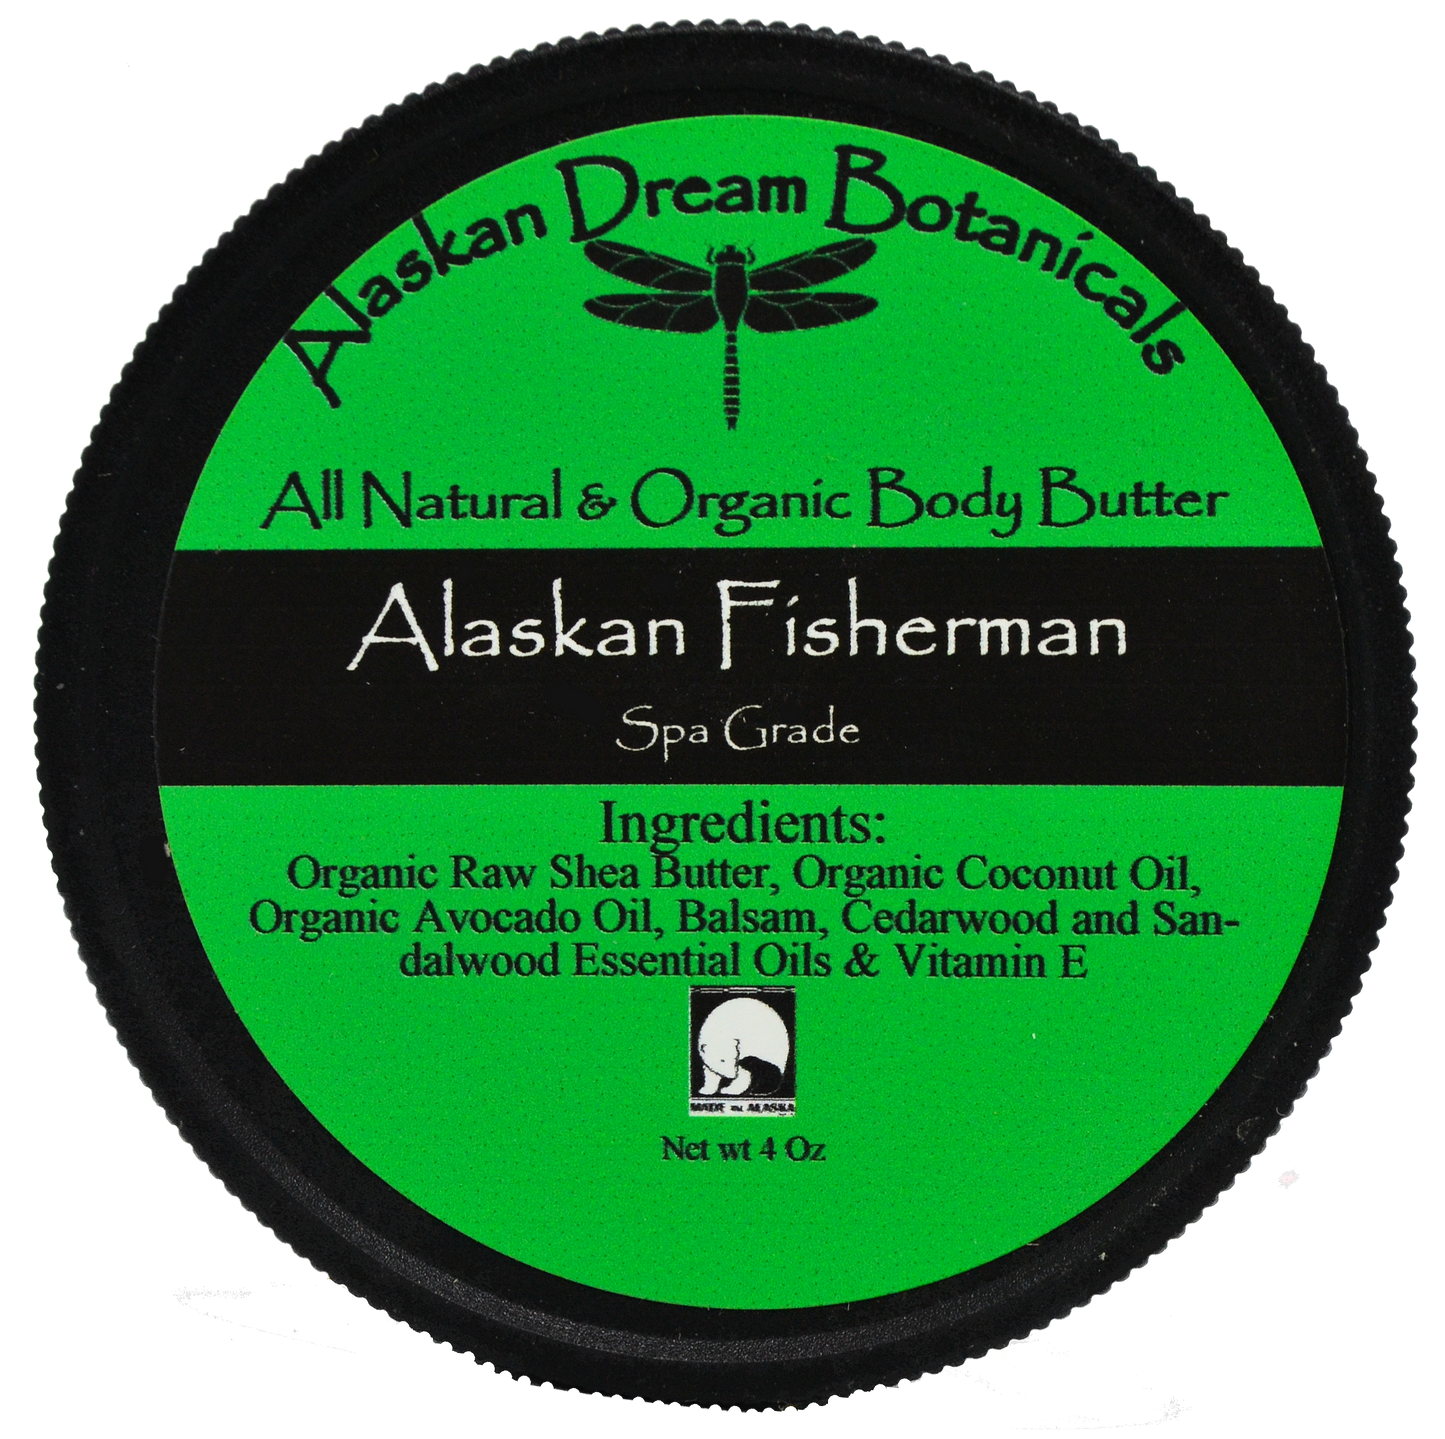 Alaskan Fisherman Spa Grade Body Butter - Alaskan Dream Botanicals